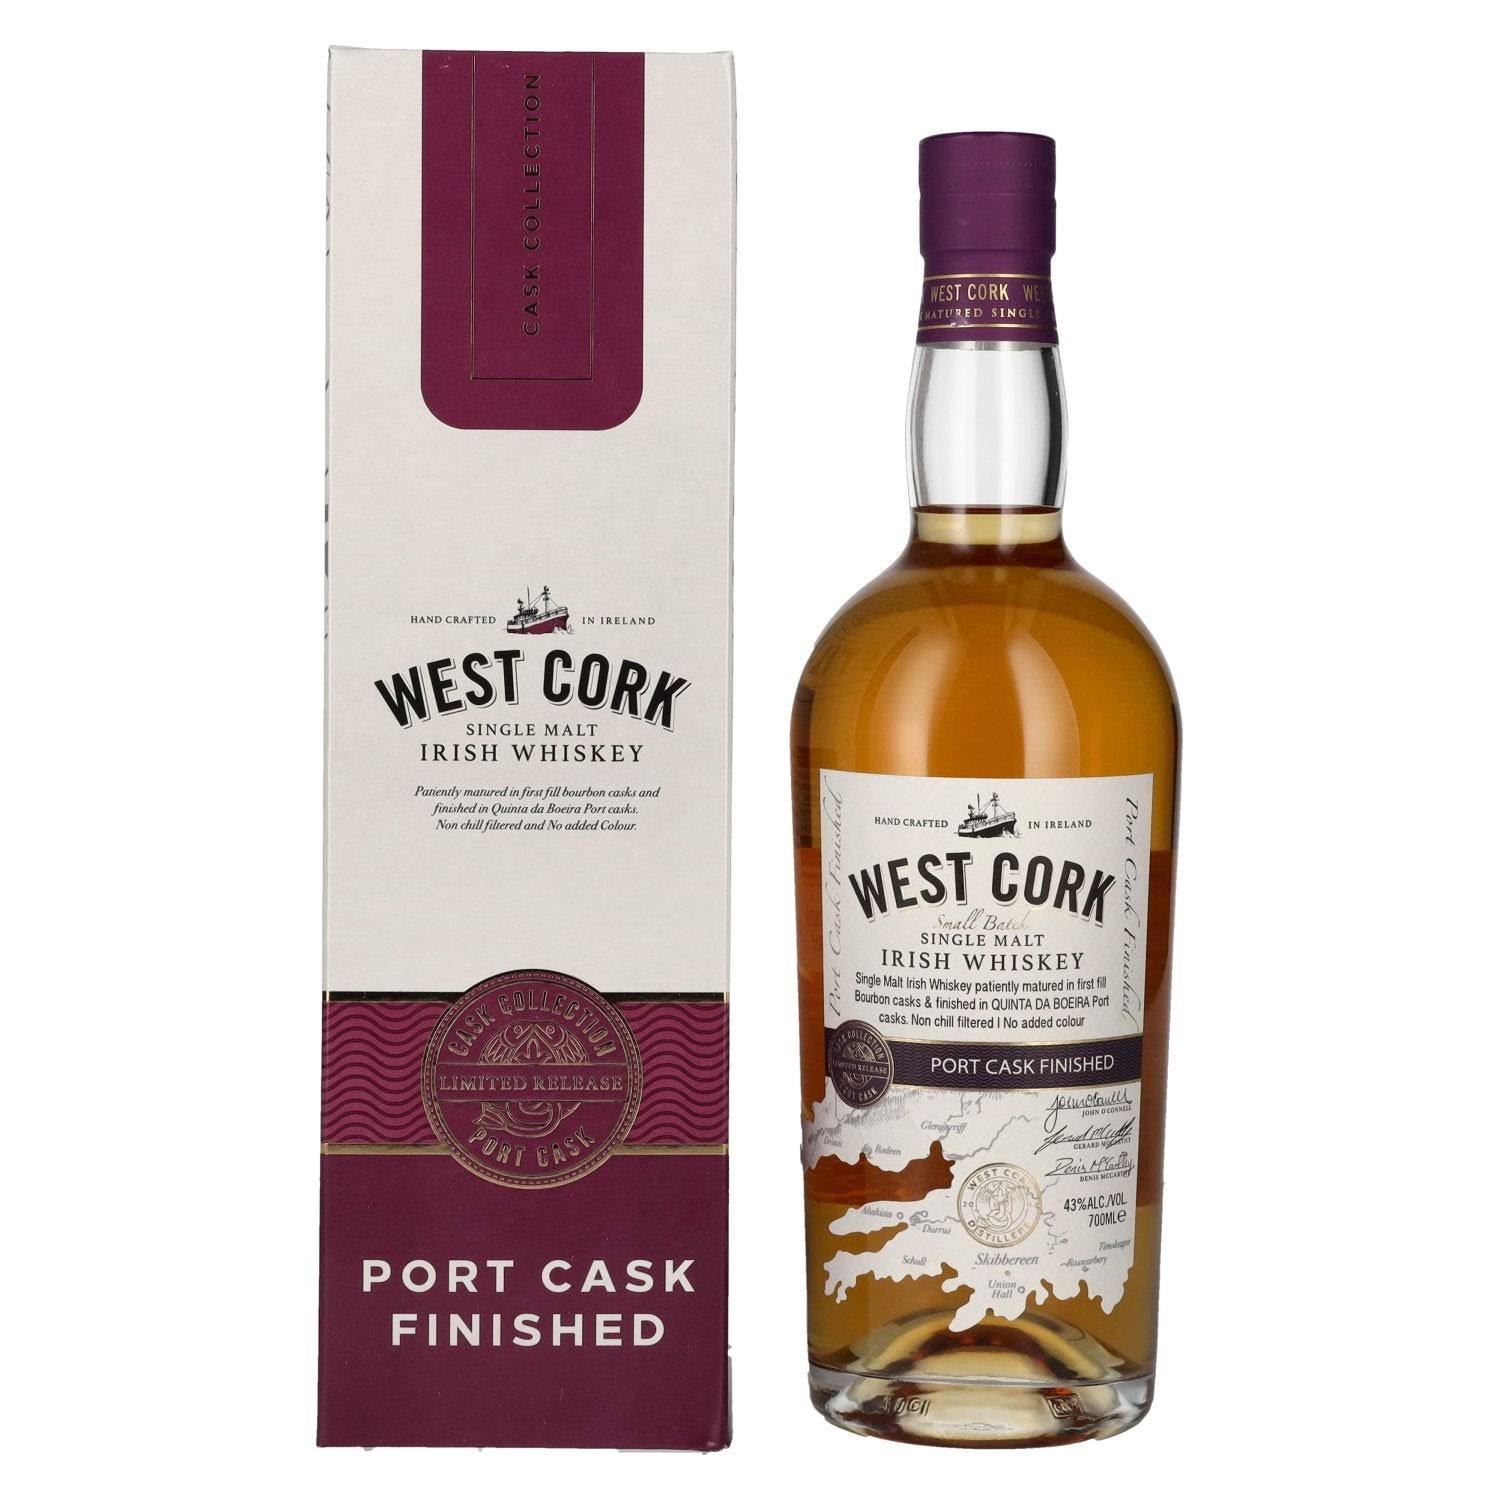 West Cork Single Malt Irish Whiskey Port Cask Finished 43% Vol. 0,7l in Giftbox